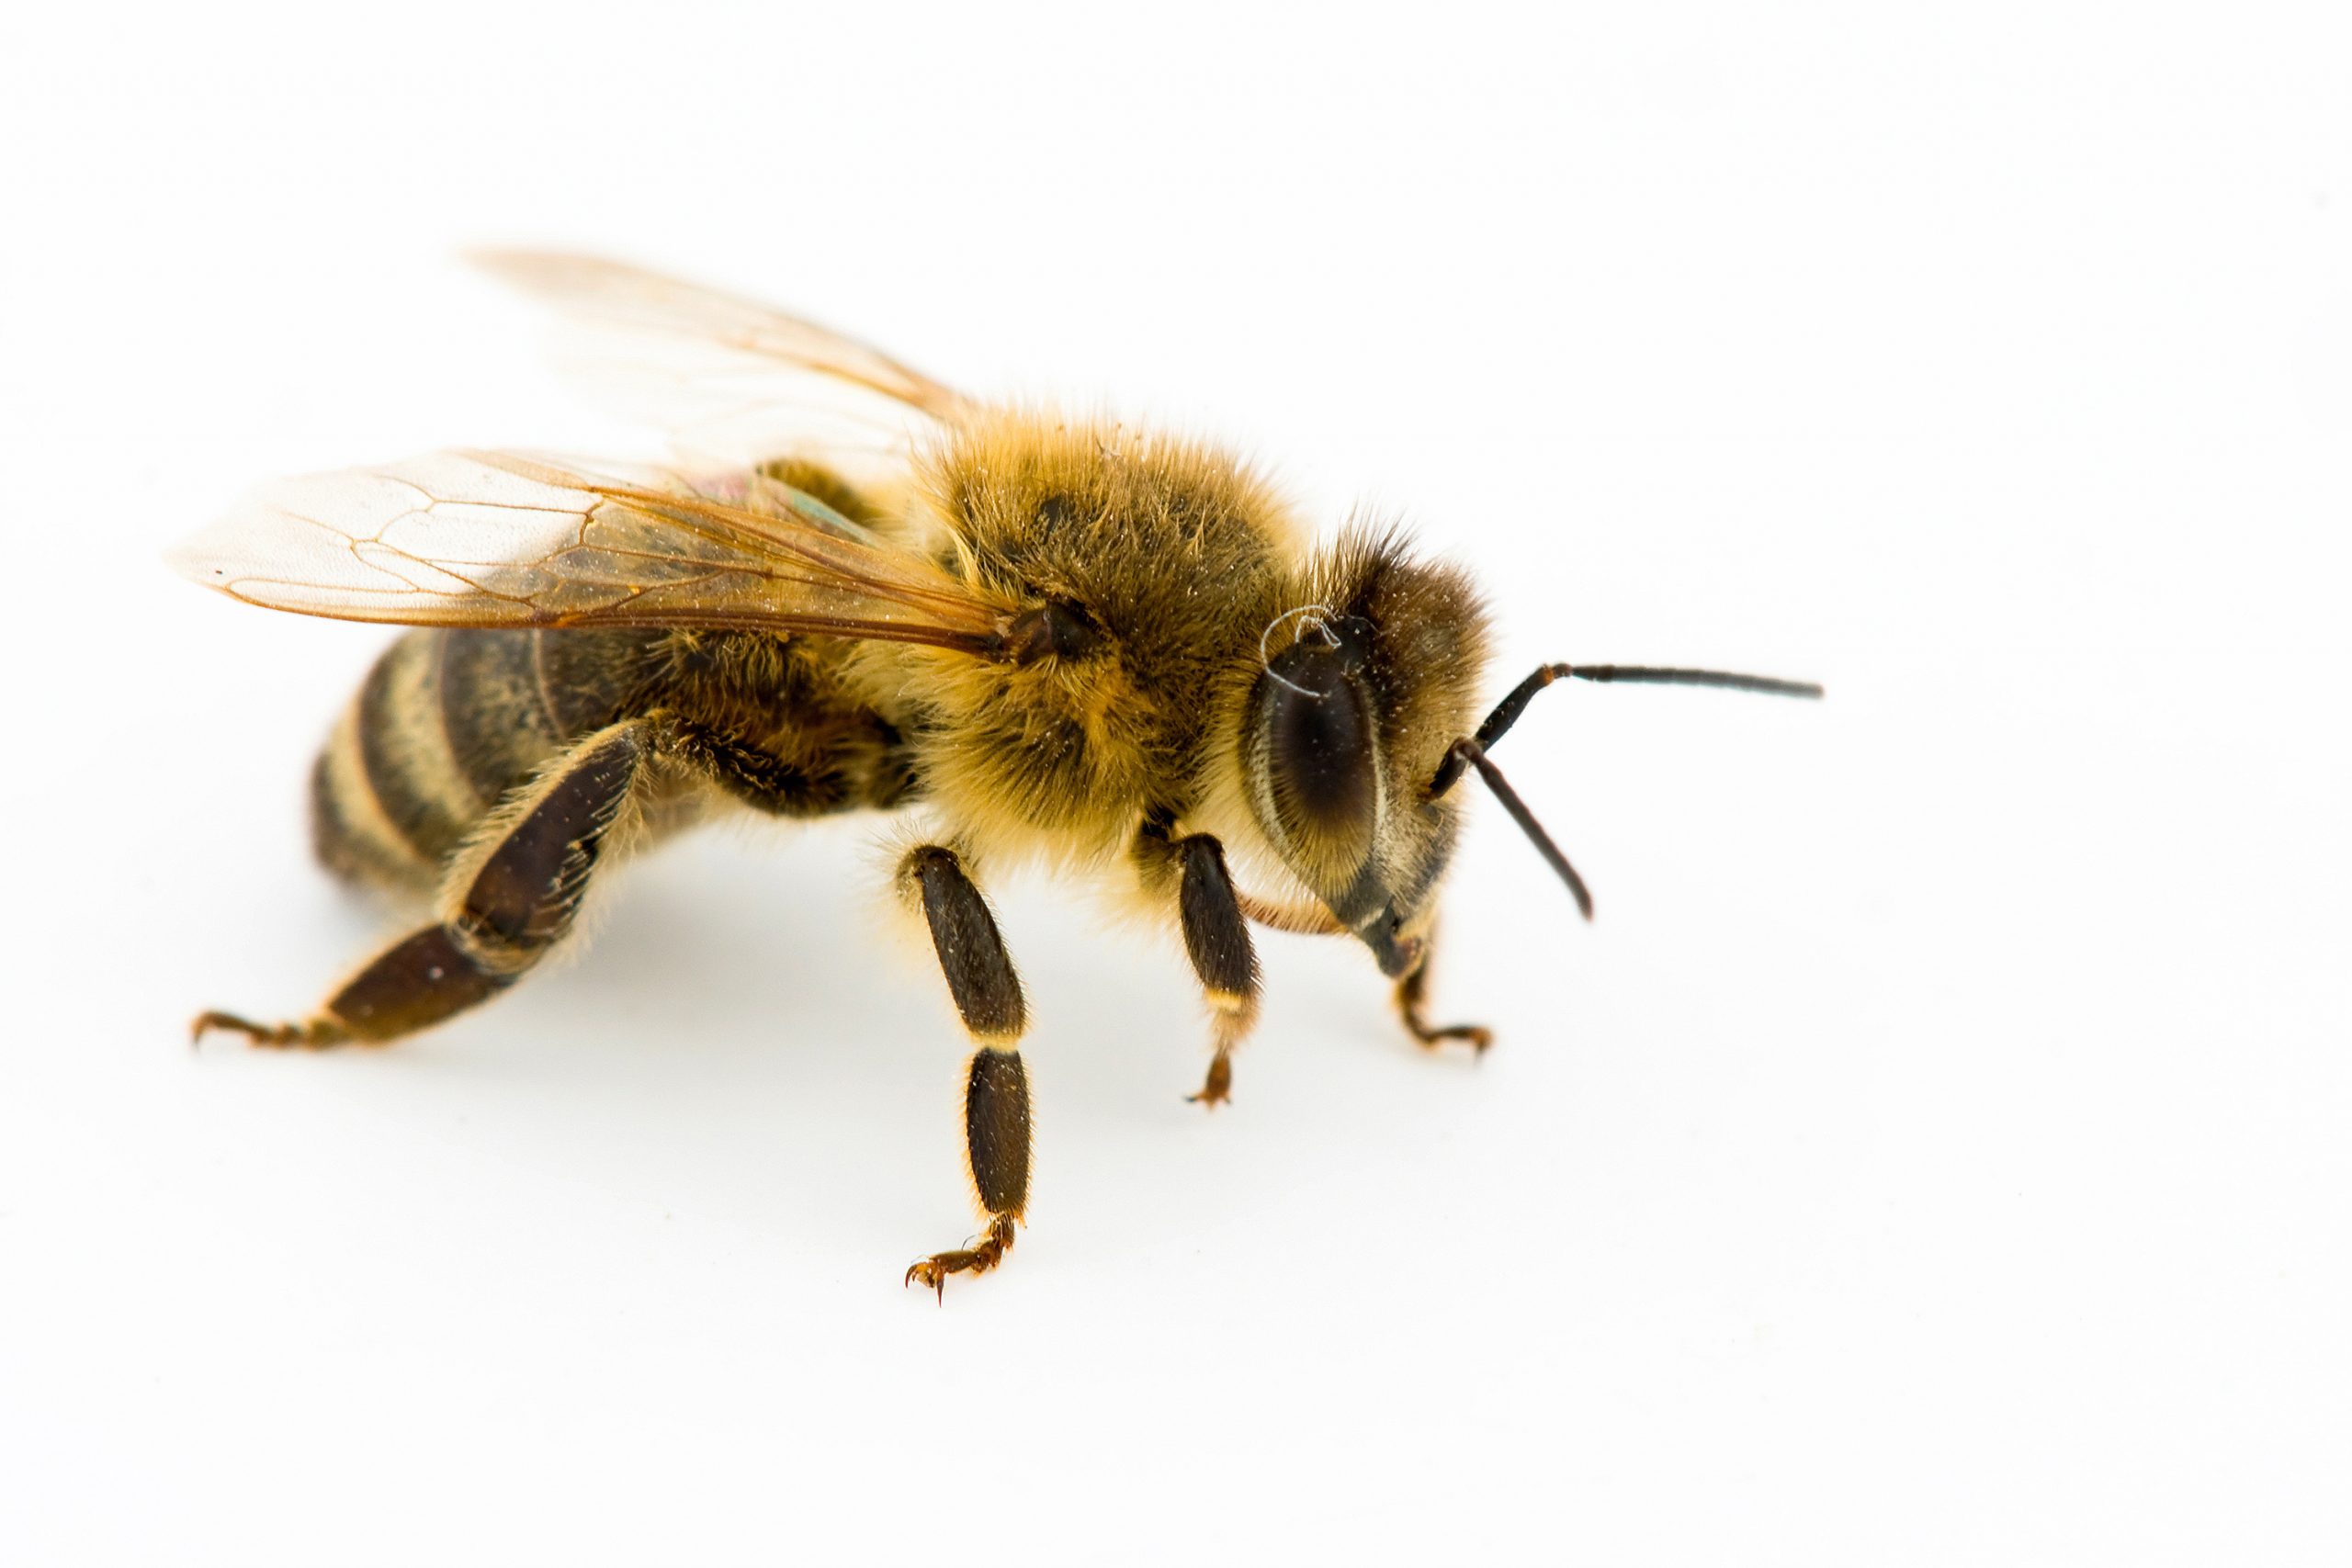 Honeybees are the New “Trendy” Topic